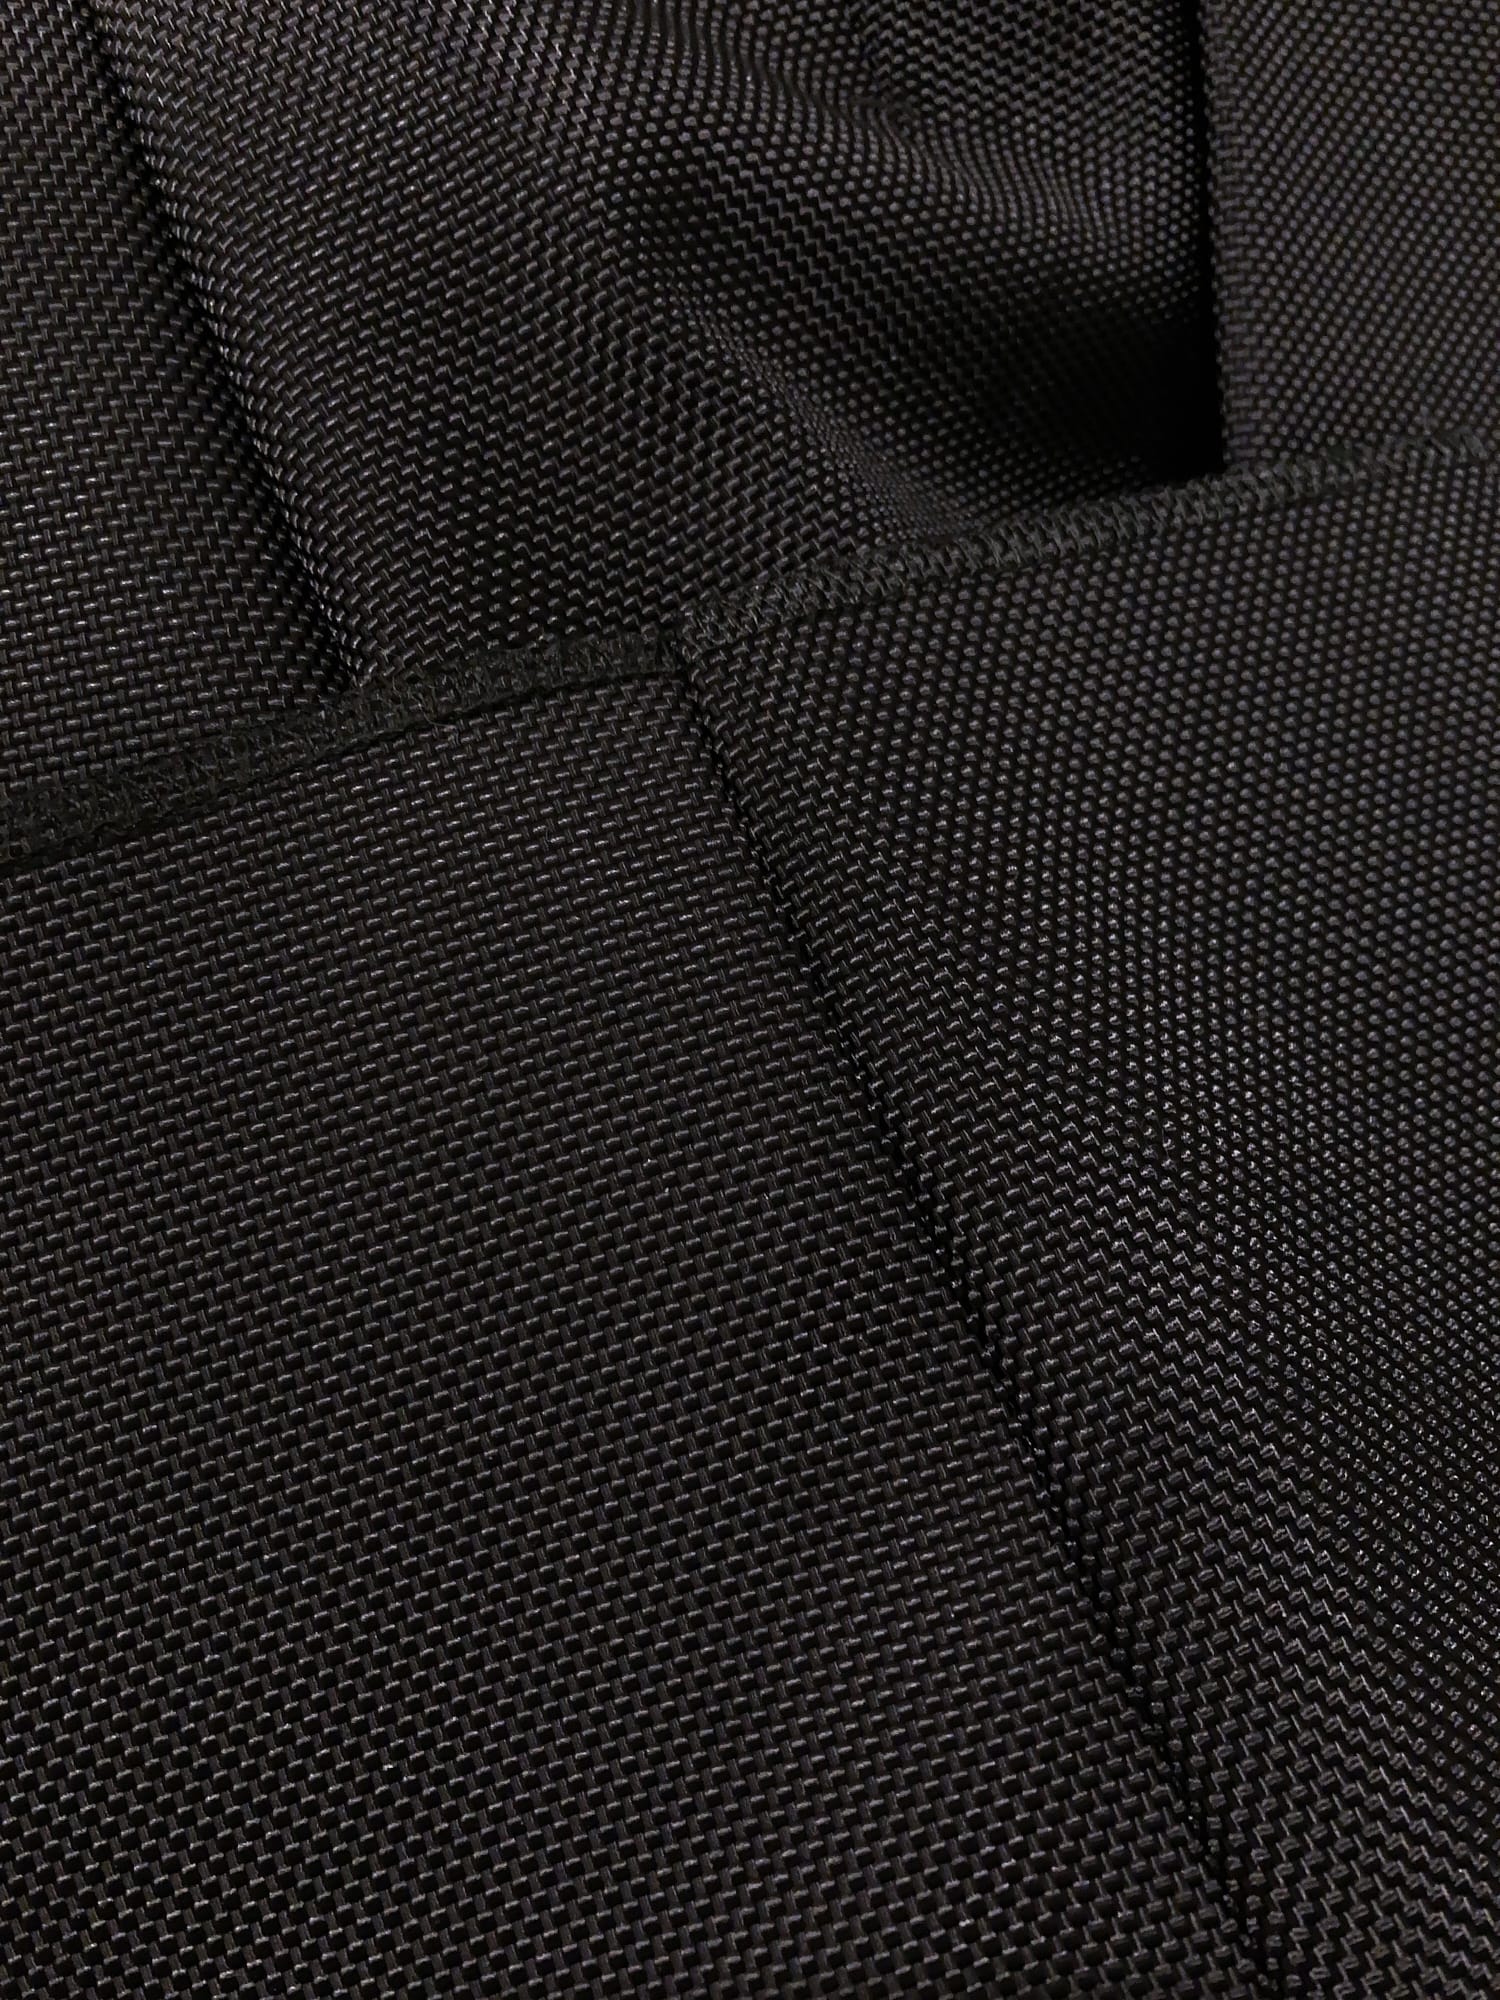 Dirk Bikkembergs Hommes Pour La Femme 90s black ballistic nylon pleated trousers